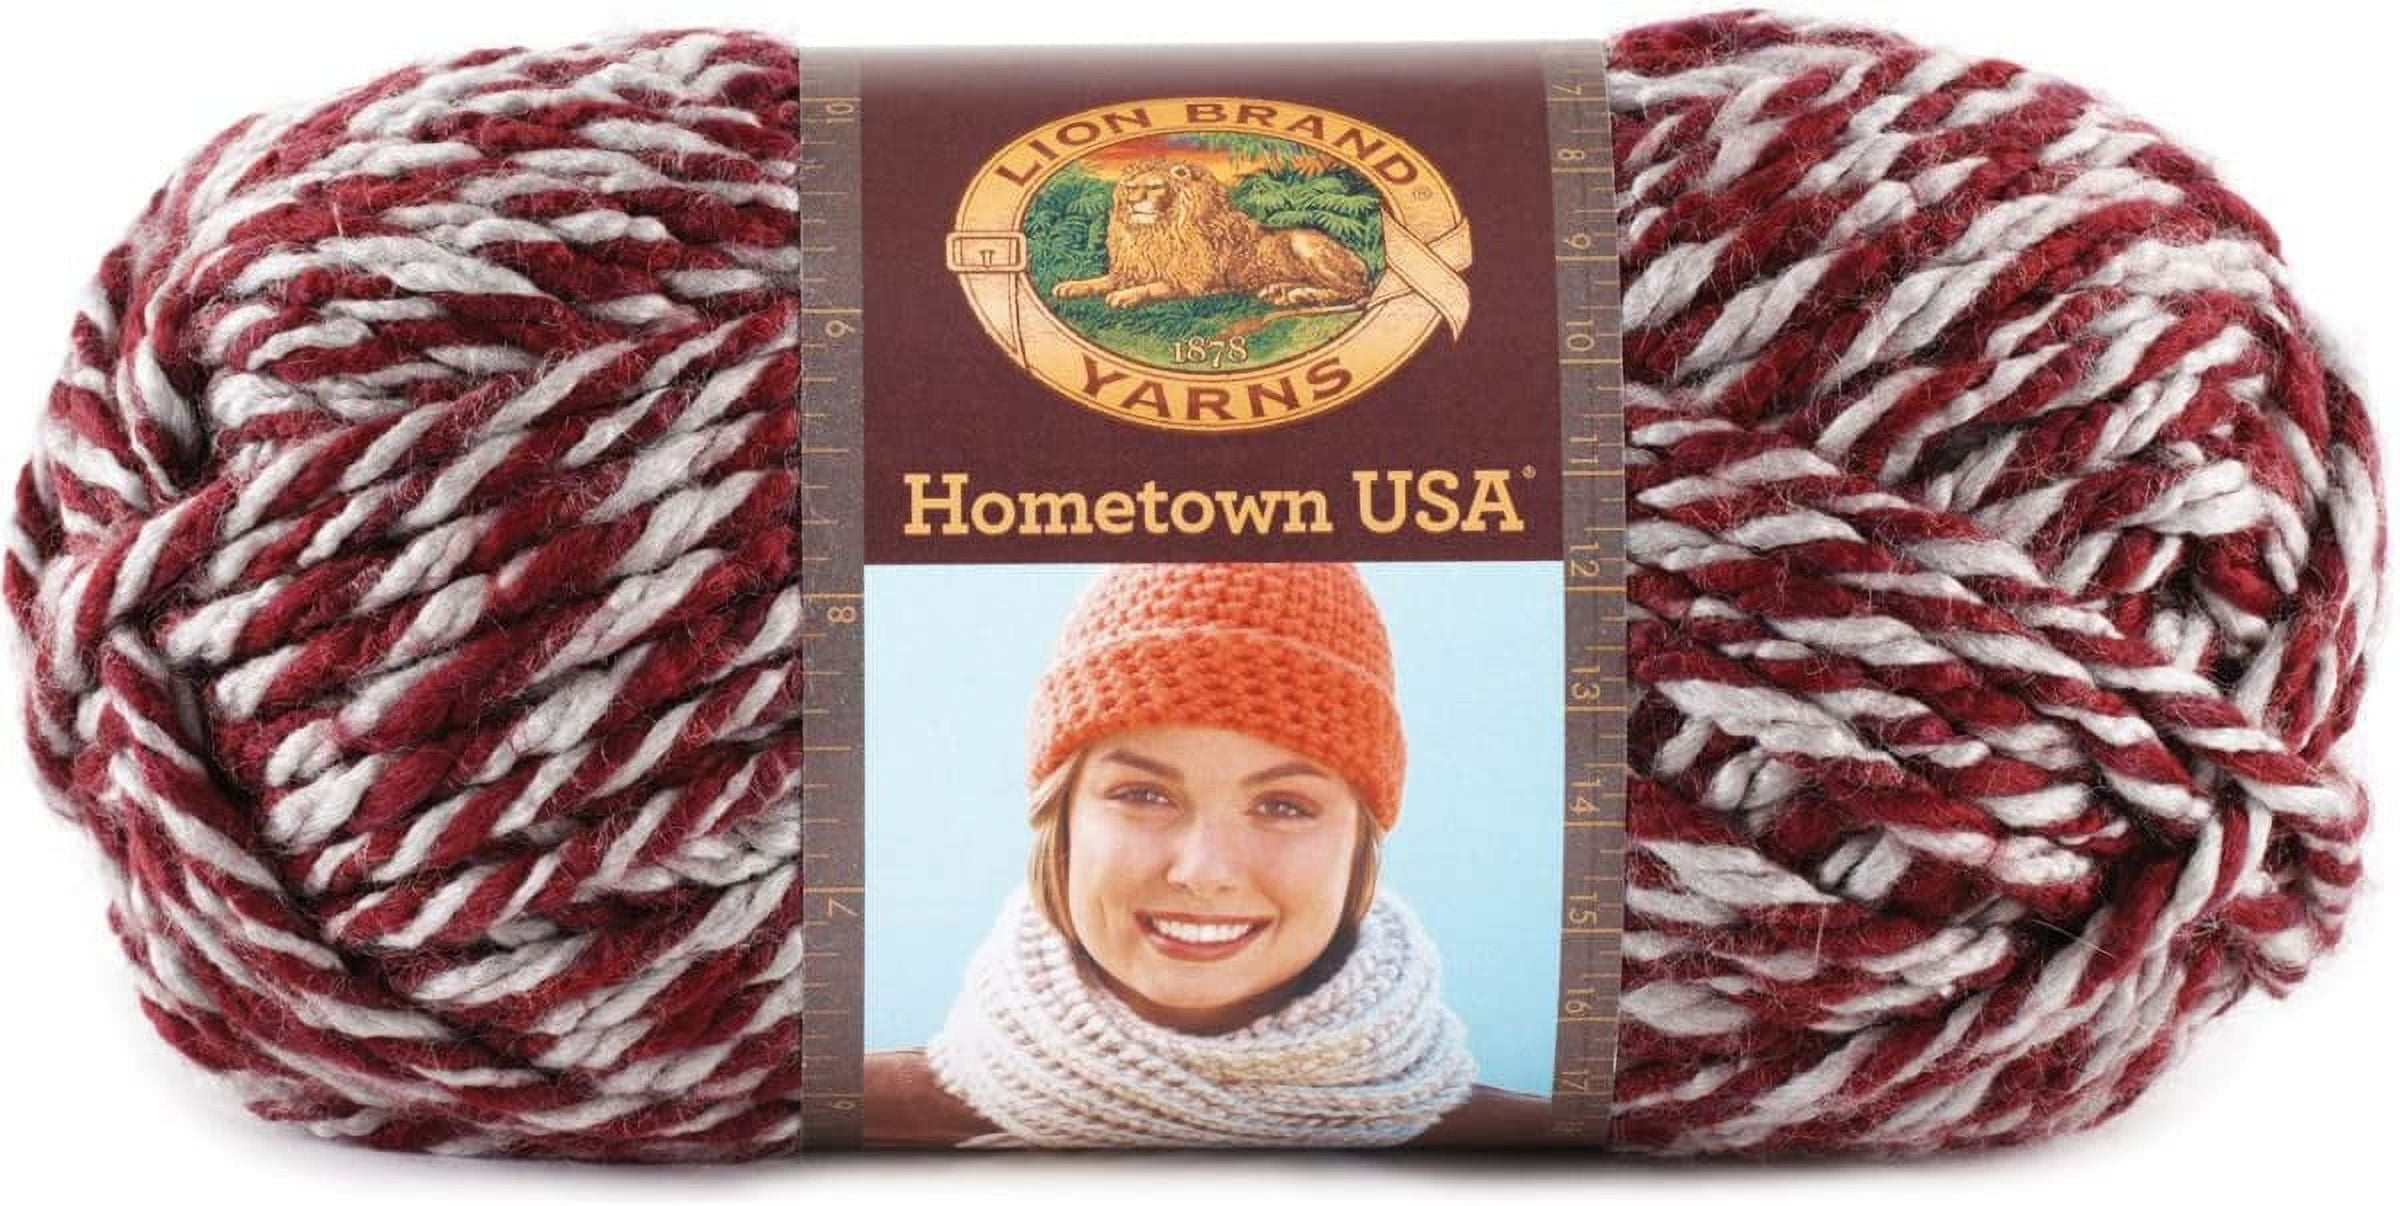 Lion Brand Yarn Hometown Yarn, Bulky Yarn, Yarn for Knitting and  Crocheting, 1-Pack, Phoenix Azalea